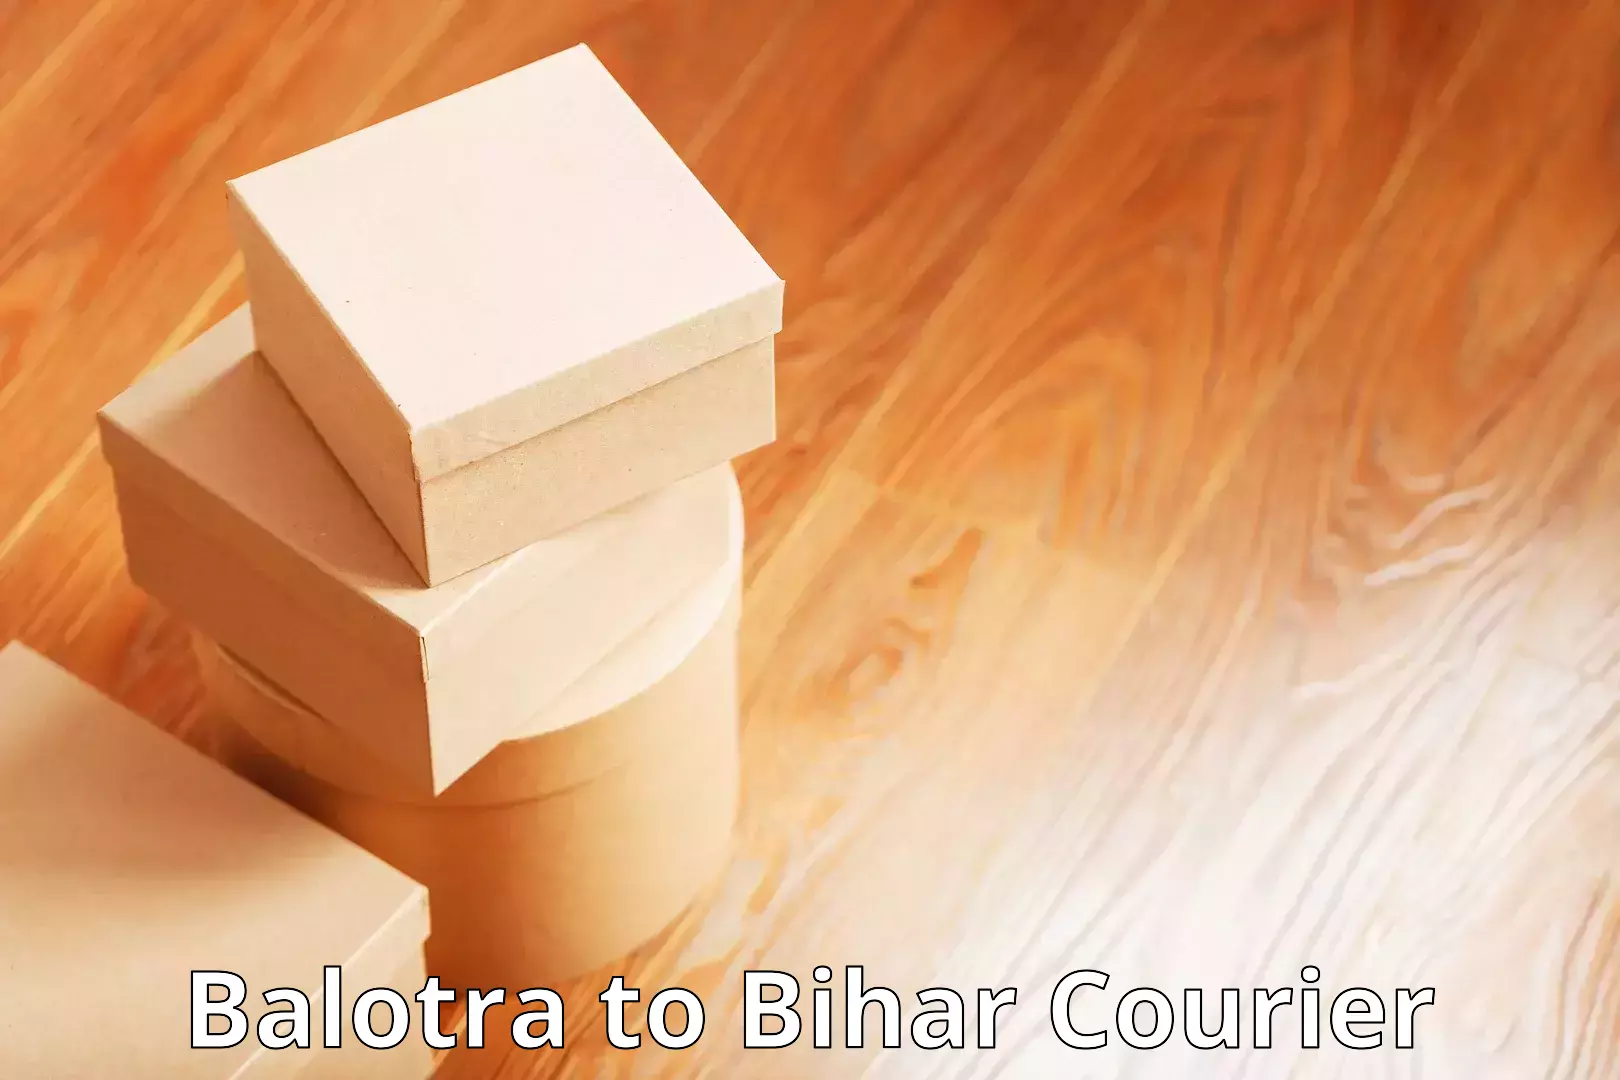 Courier service innovation Balotra to Bihar